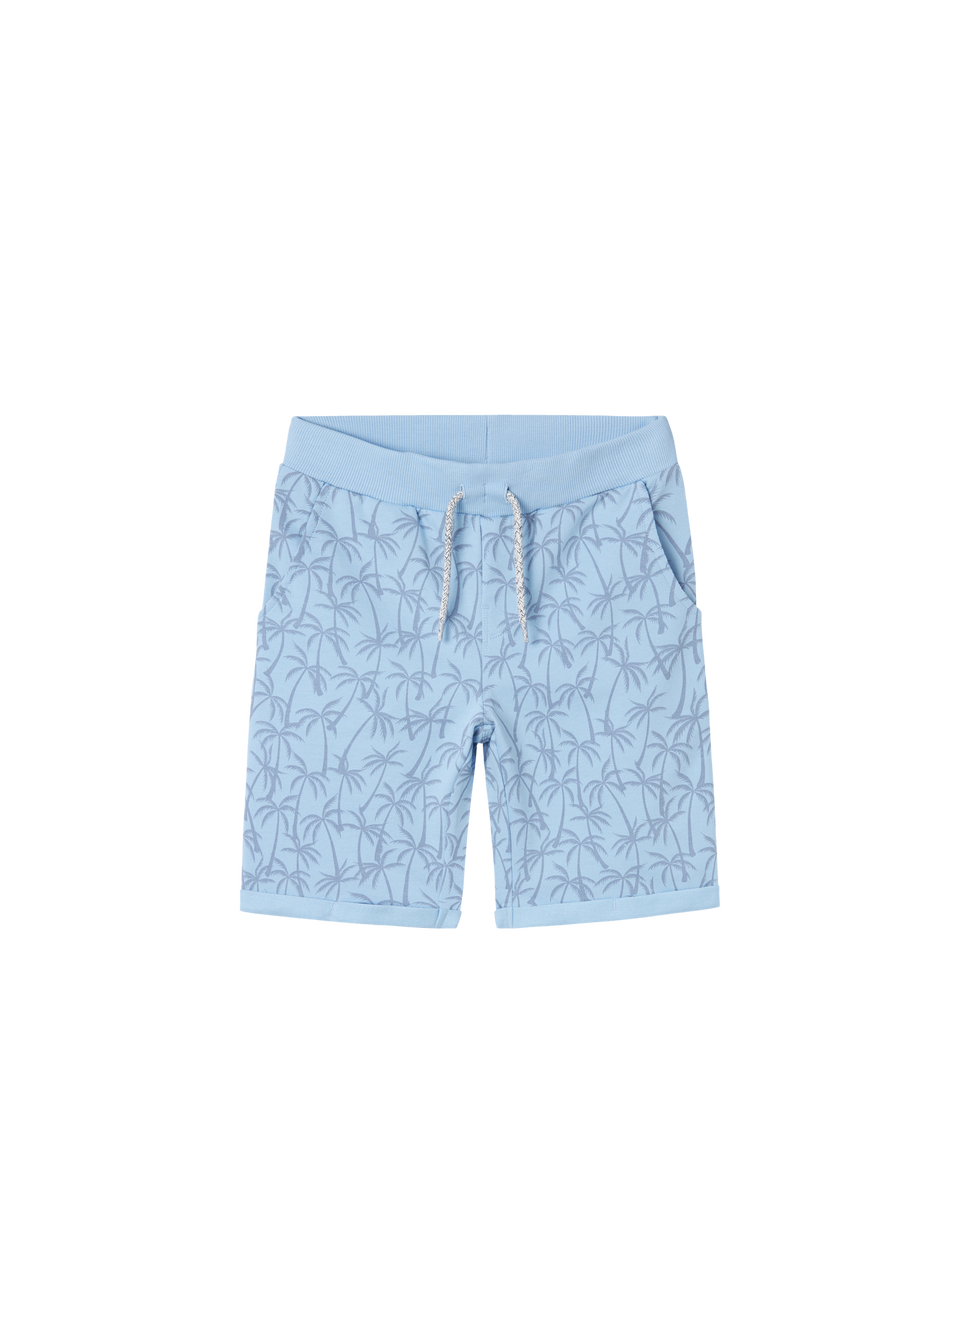 Name It Boys Blue Palm Print Shorts (9mths-12yrs)